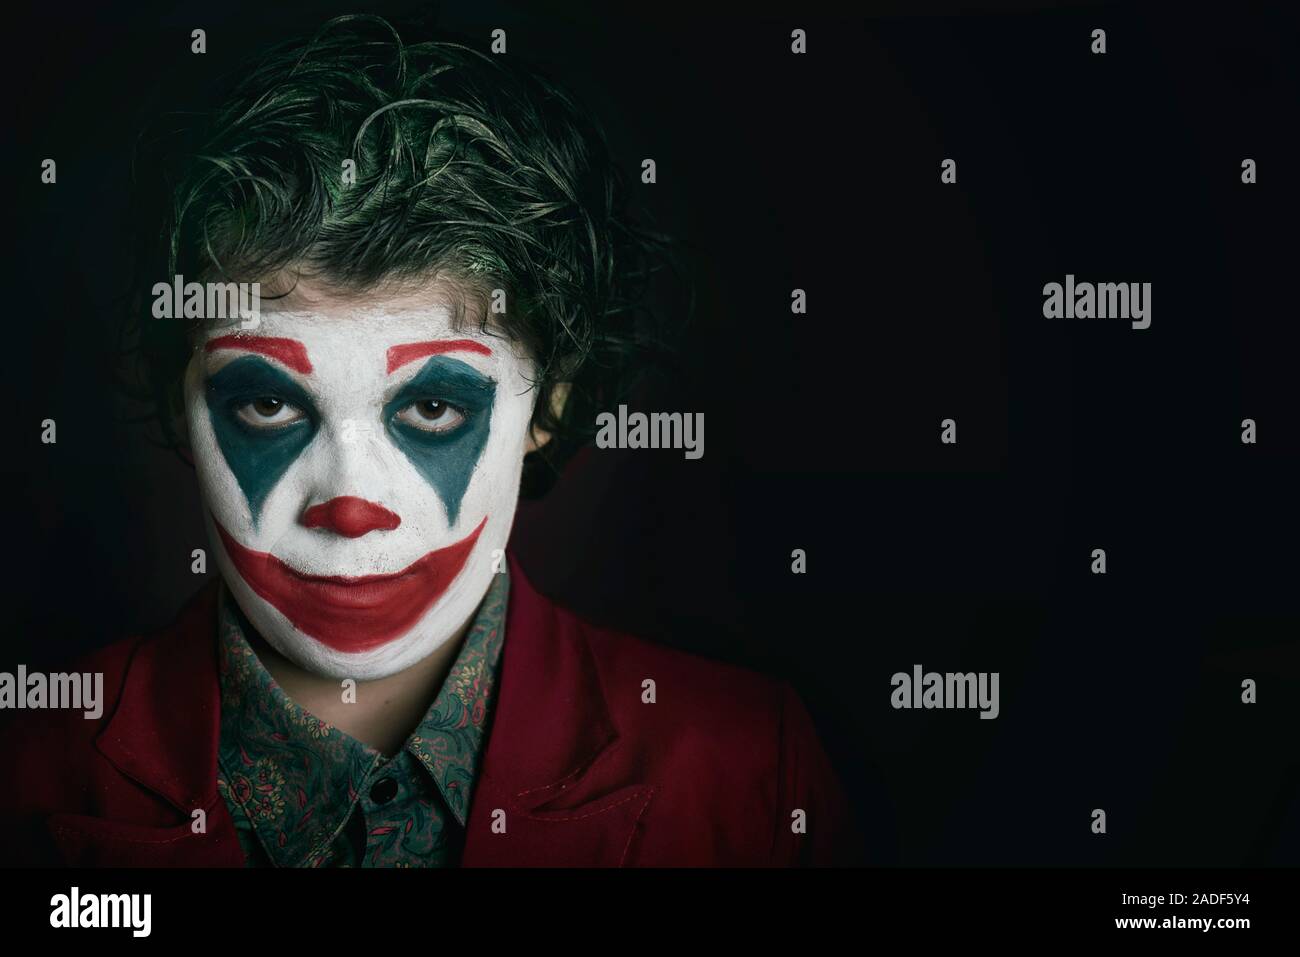 boy dressed as Joker on dark background Stock Photo